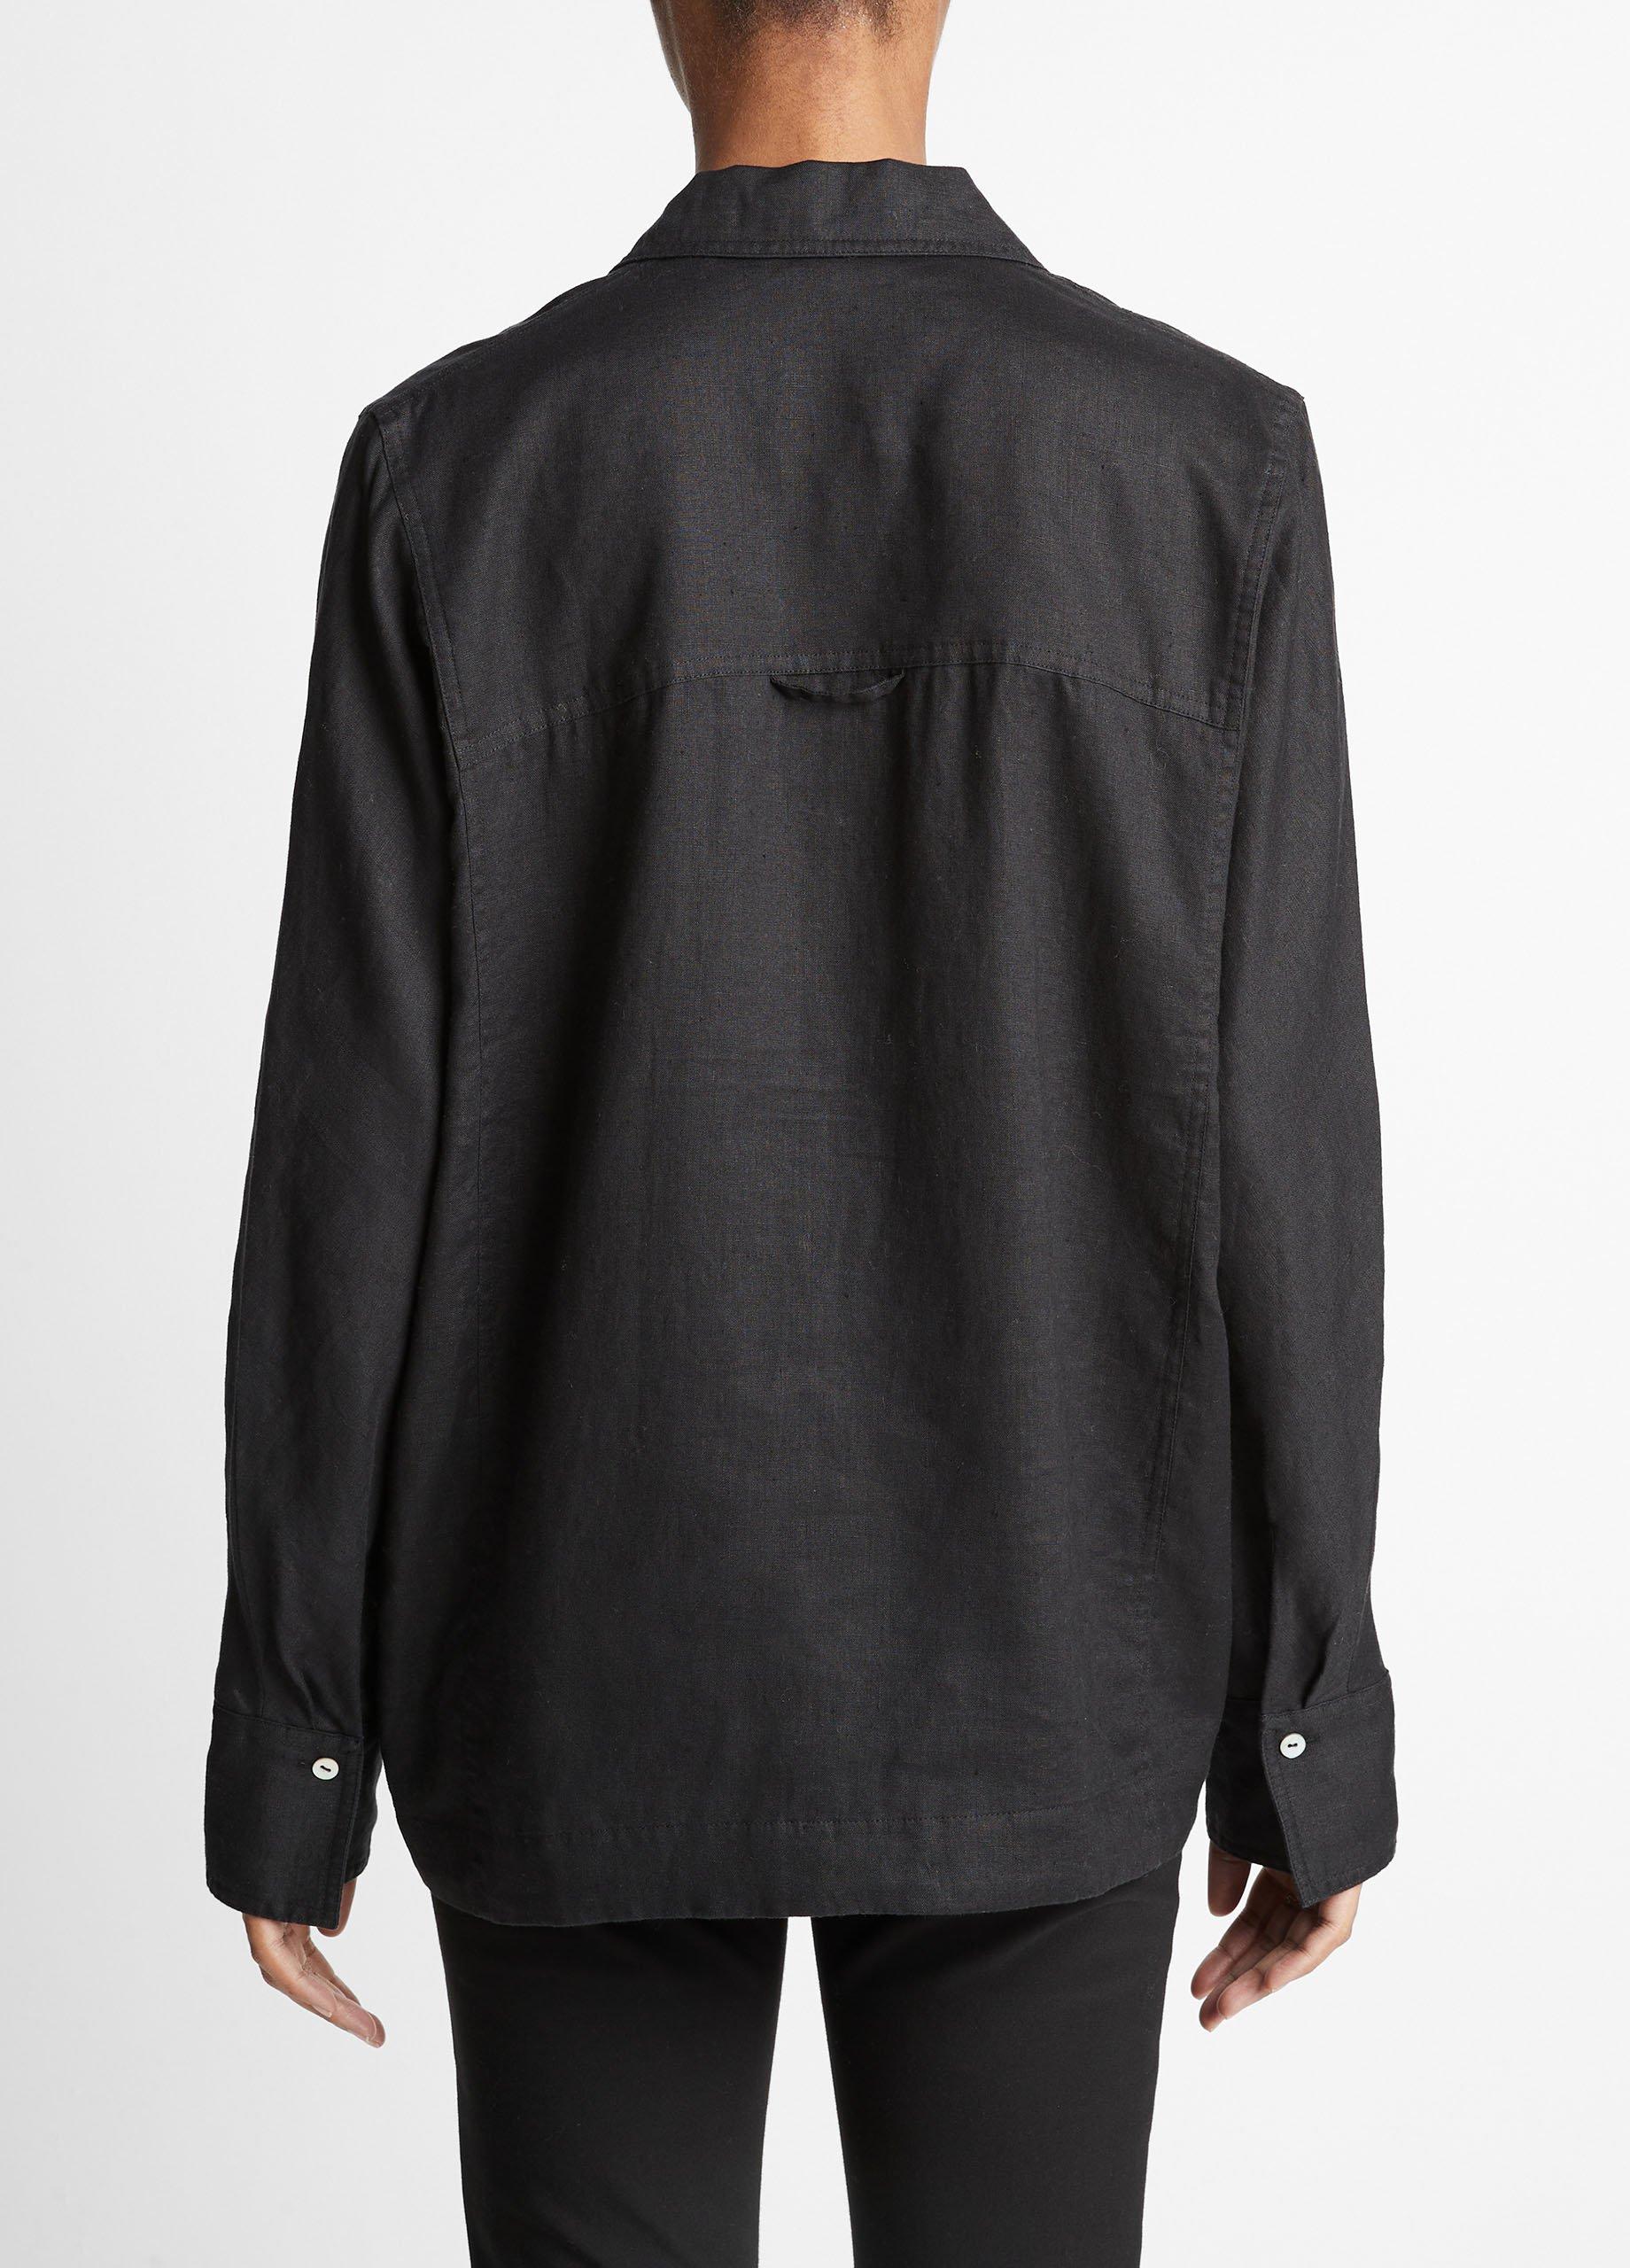 Linen Relaxed Kangaroo-Pocket Pullover Shirt in Long Sleeve | Vince